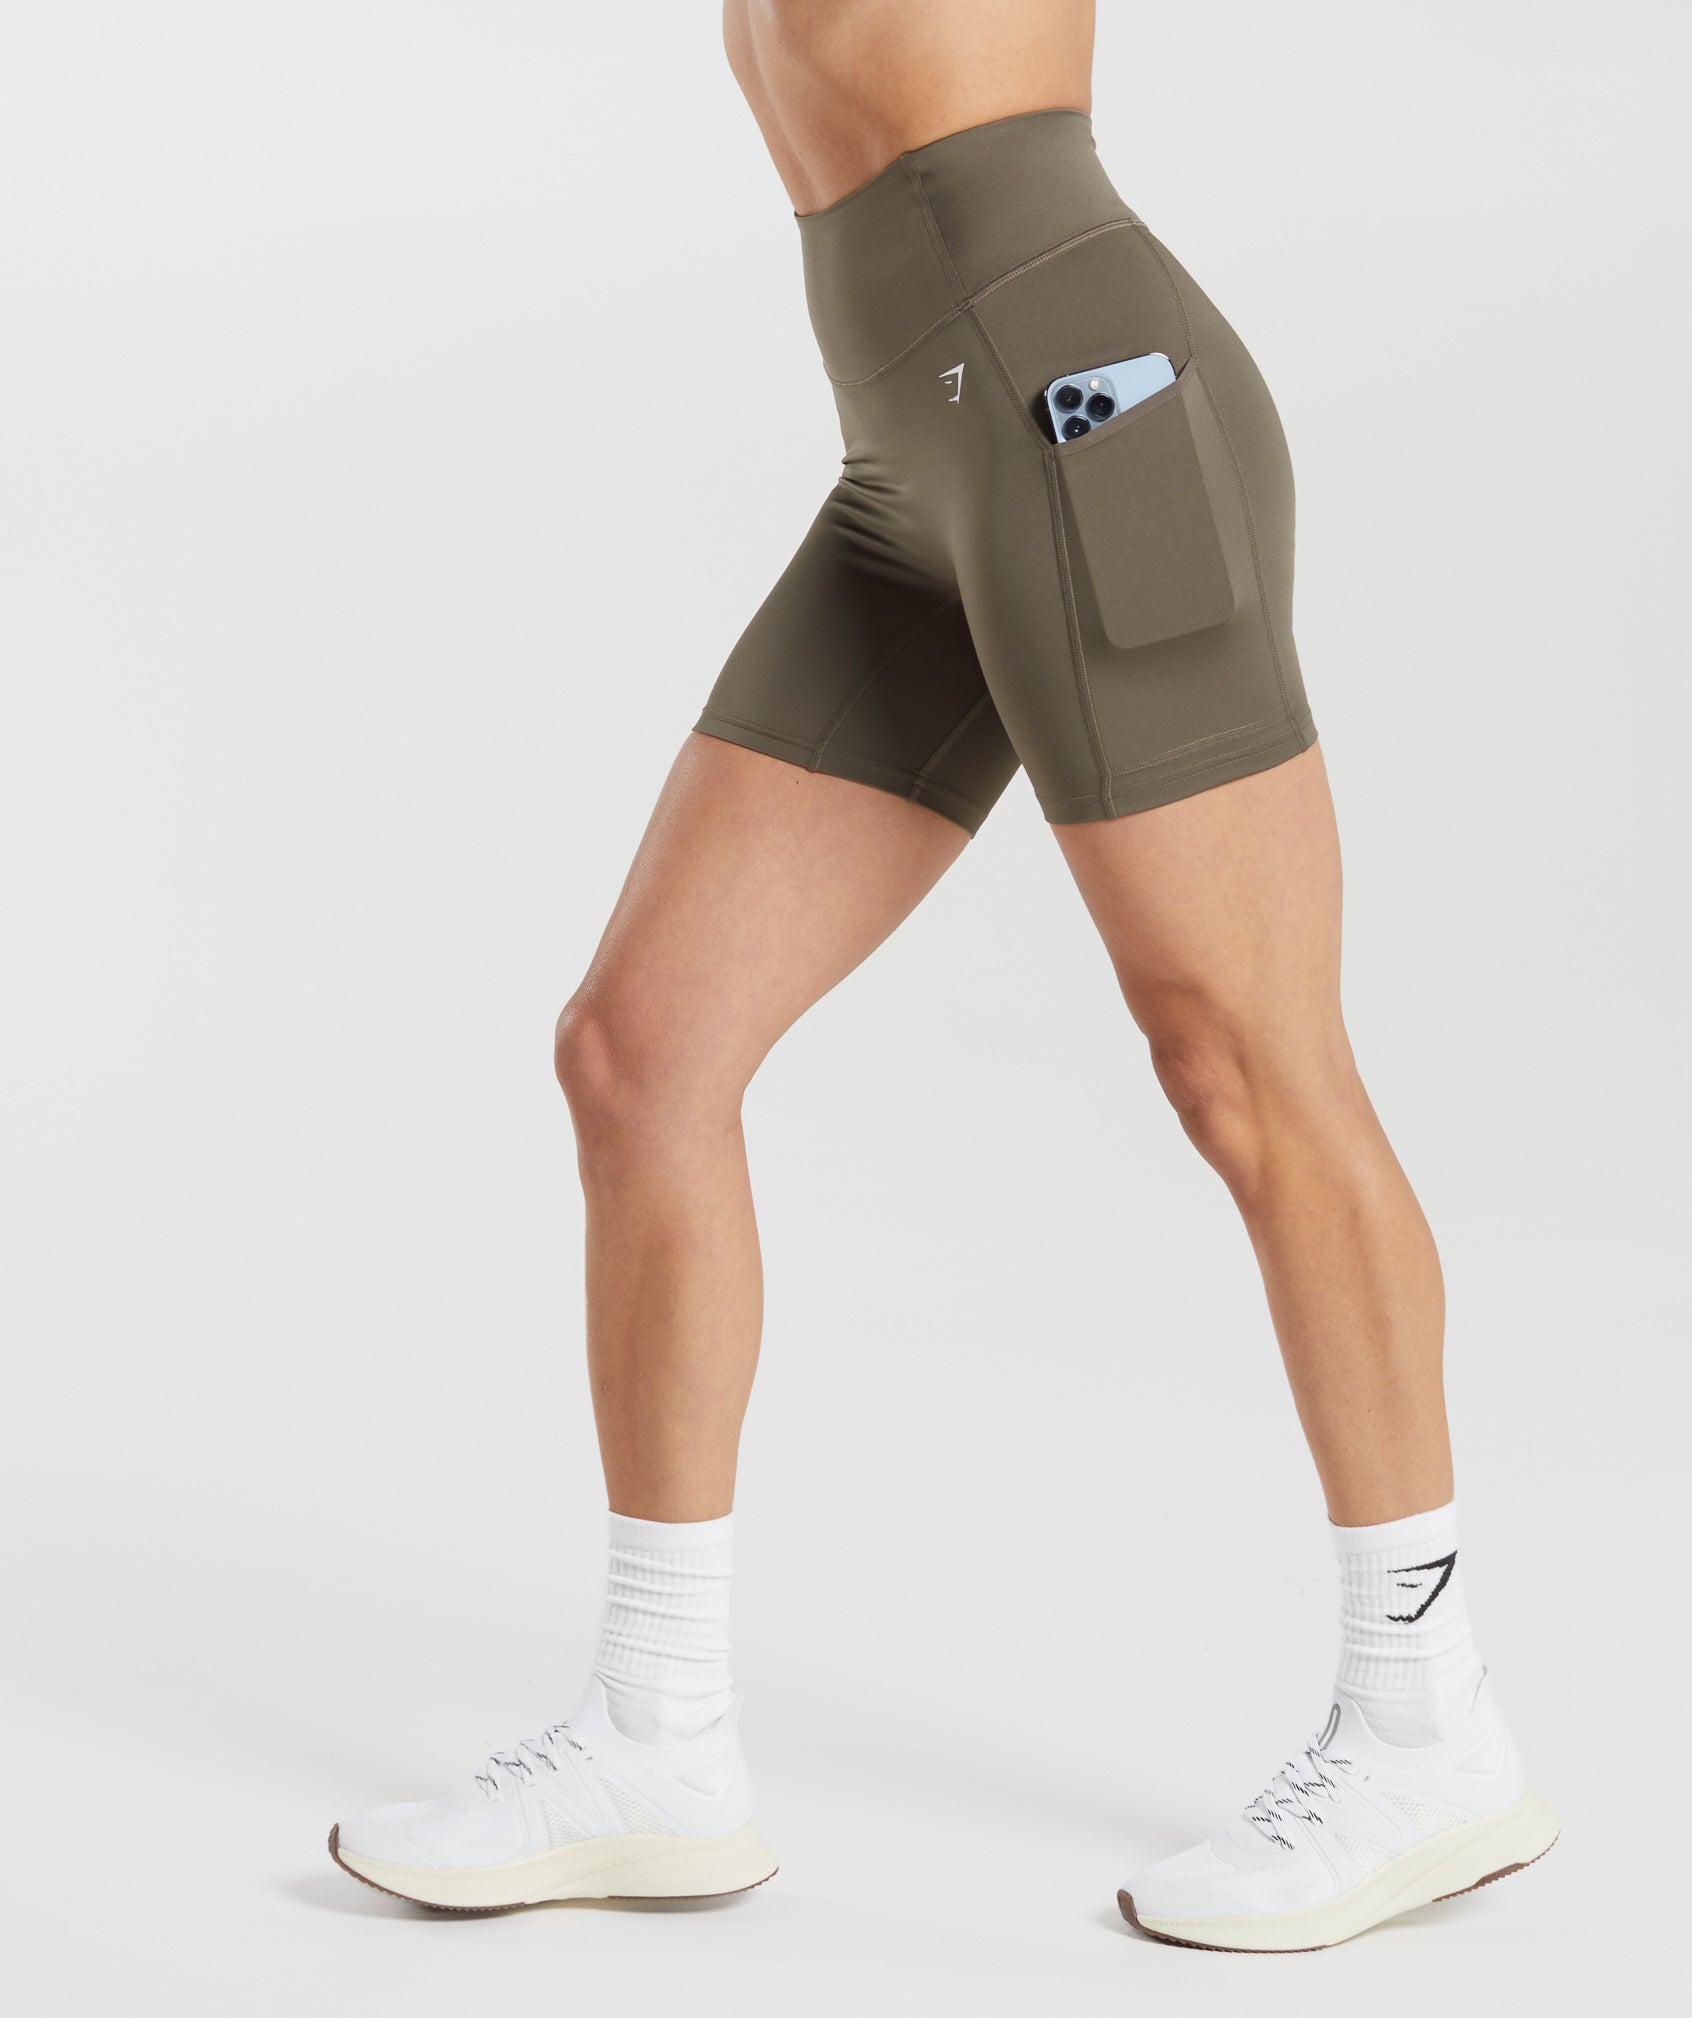 Gymshark Pocket Shorts - Camo Brown